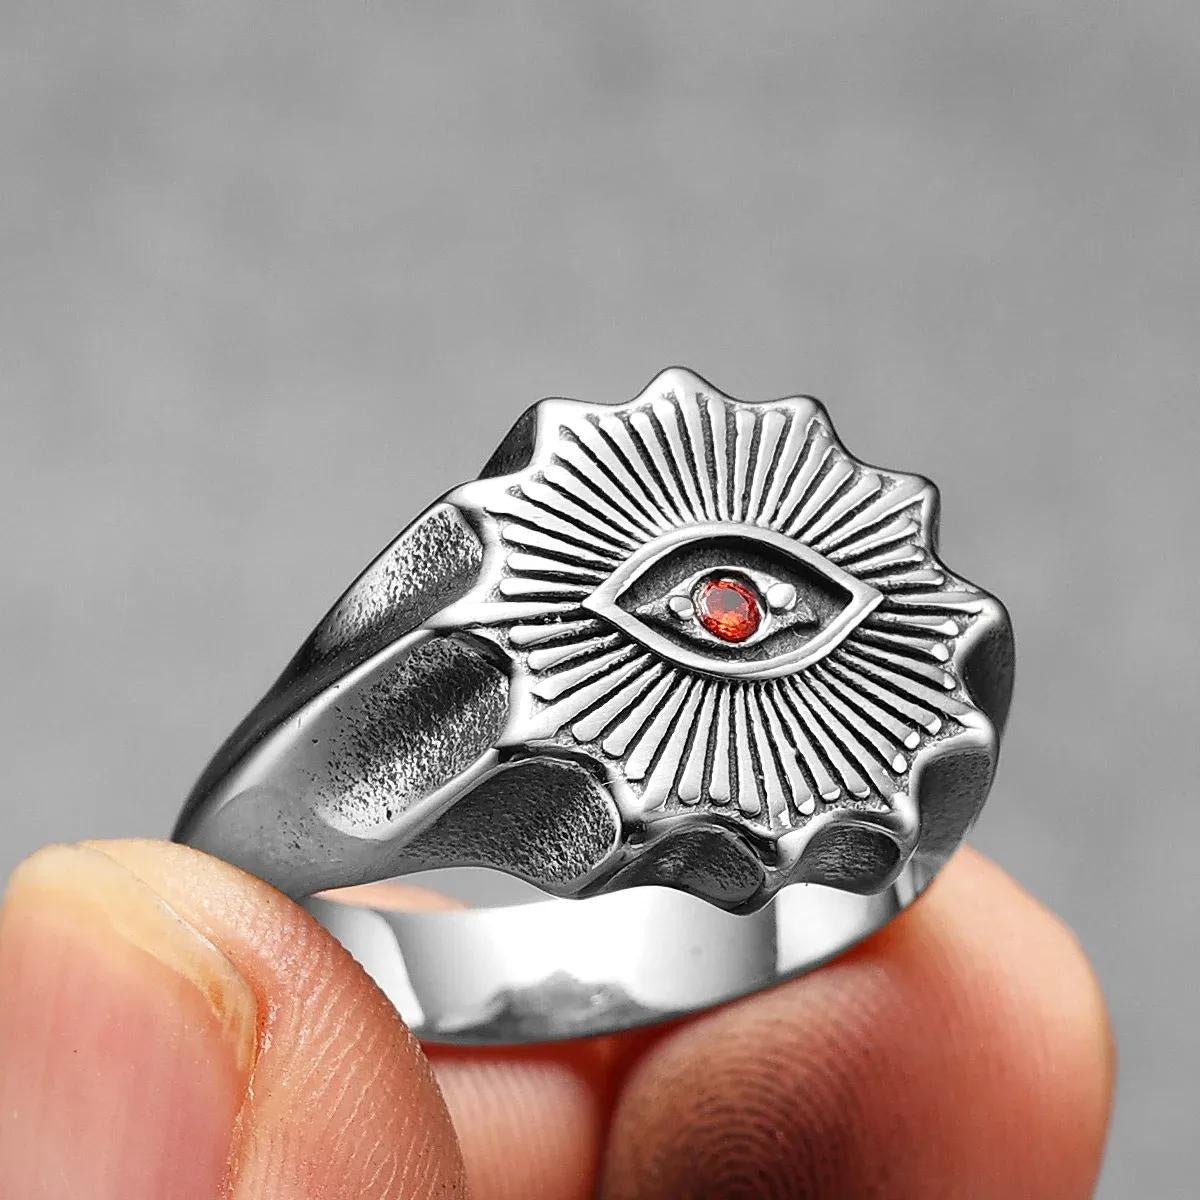 Eye Of Providence Ring - Stainless Steel With Red Rhinestone - Bricks Masons